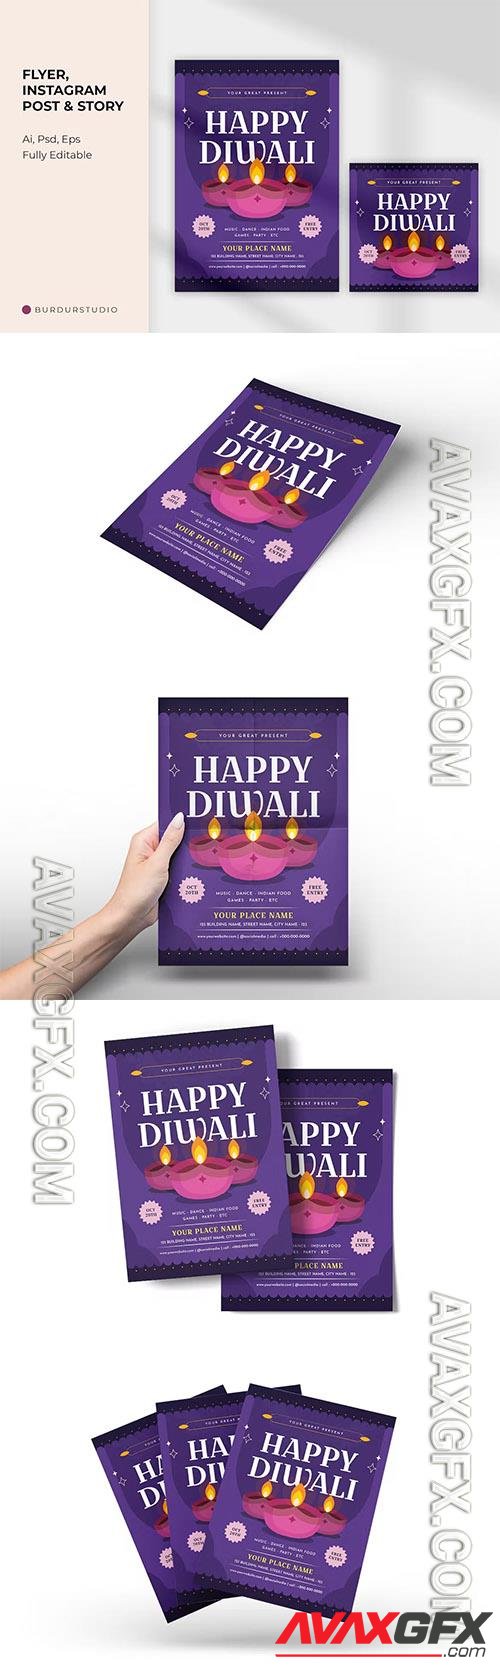 Happy Diwali Flyer and Instagram Post PSD